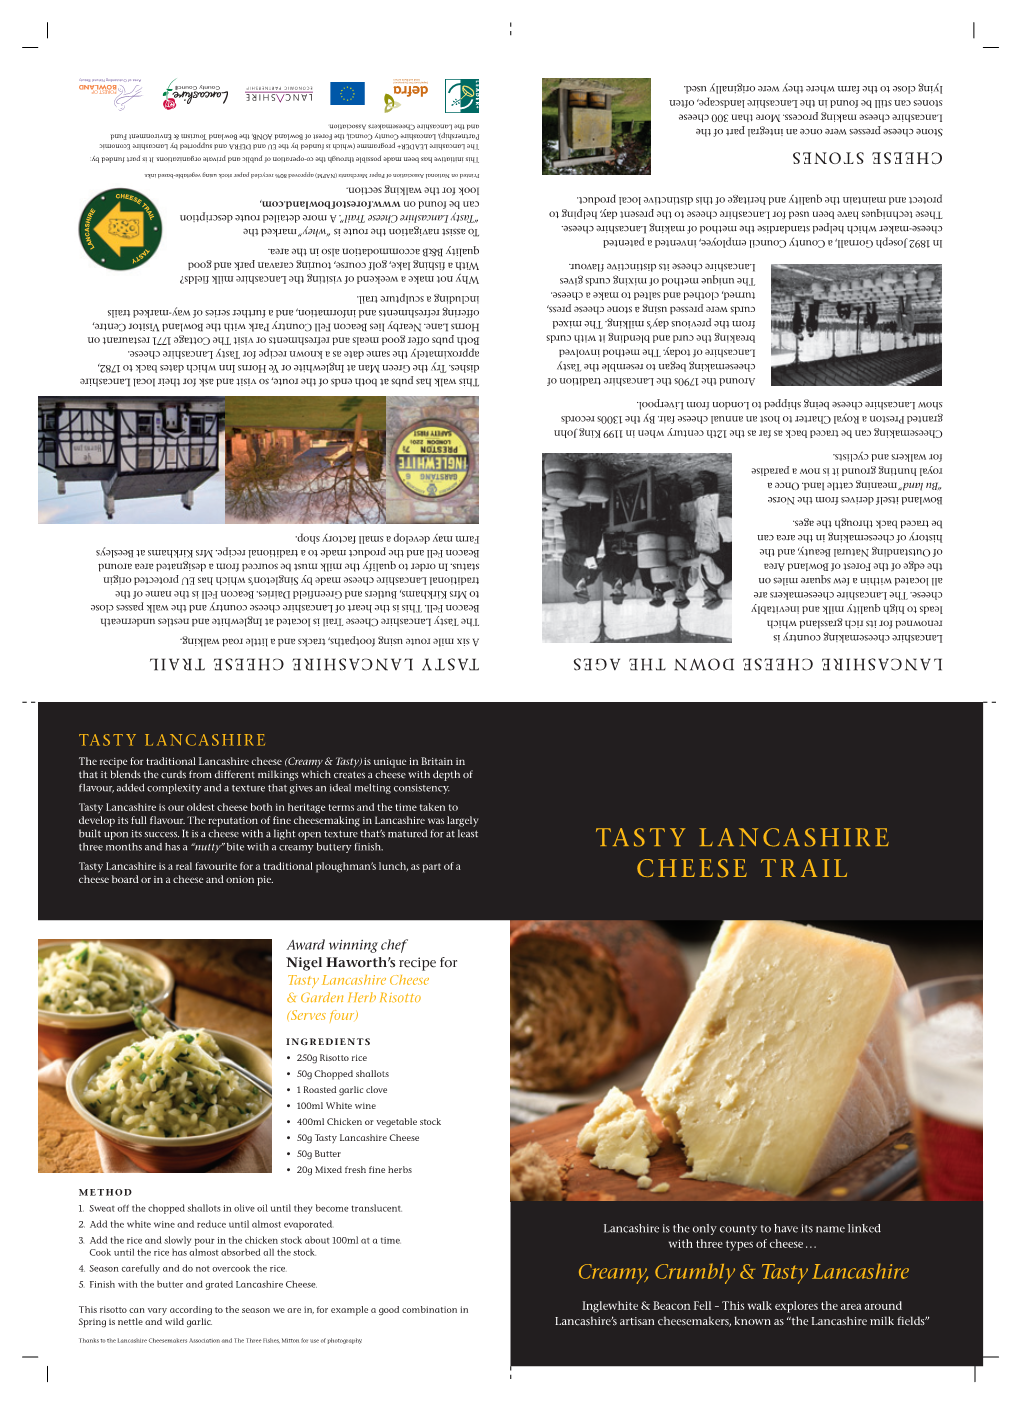 Tasty Lancashire Cheese Trail Leaflet